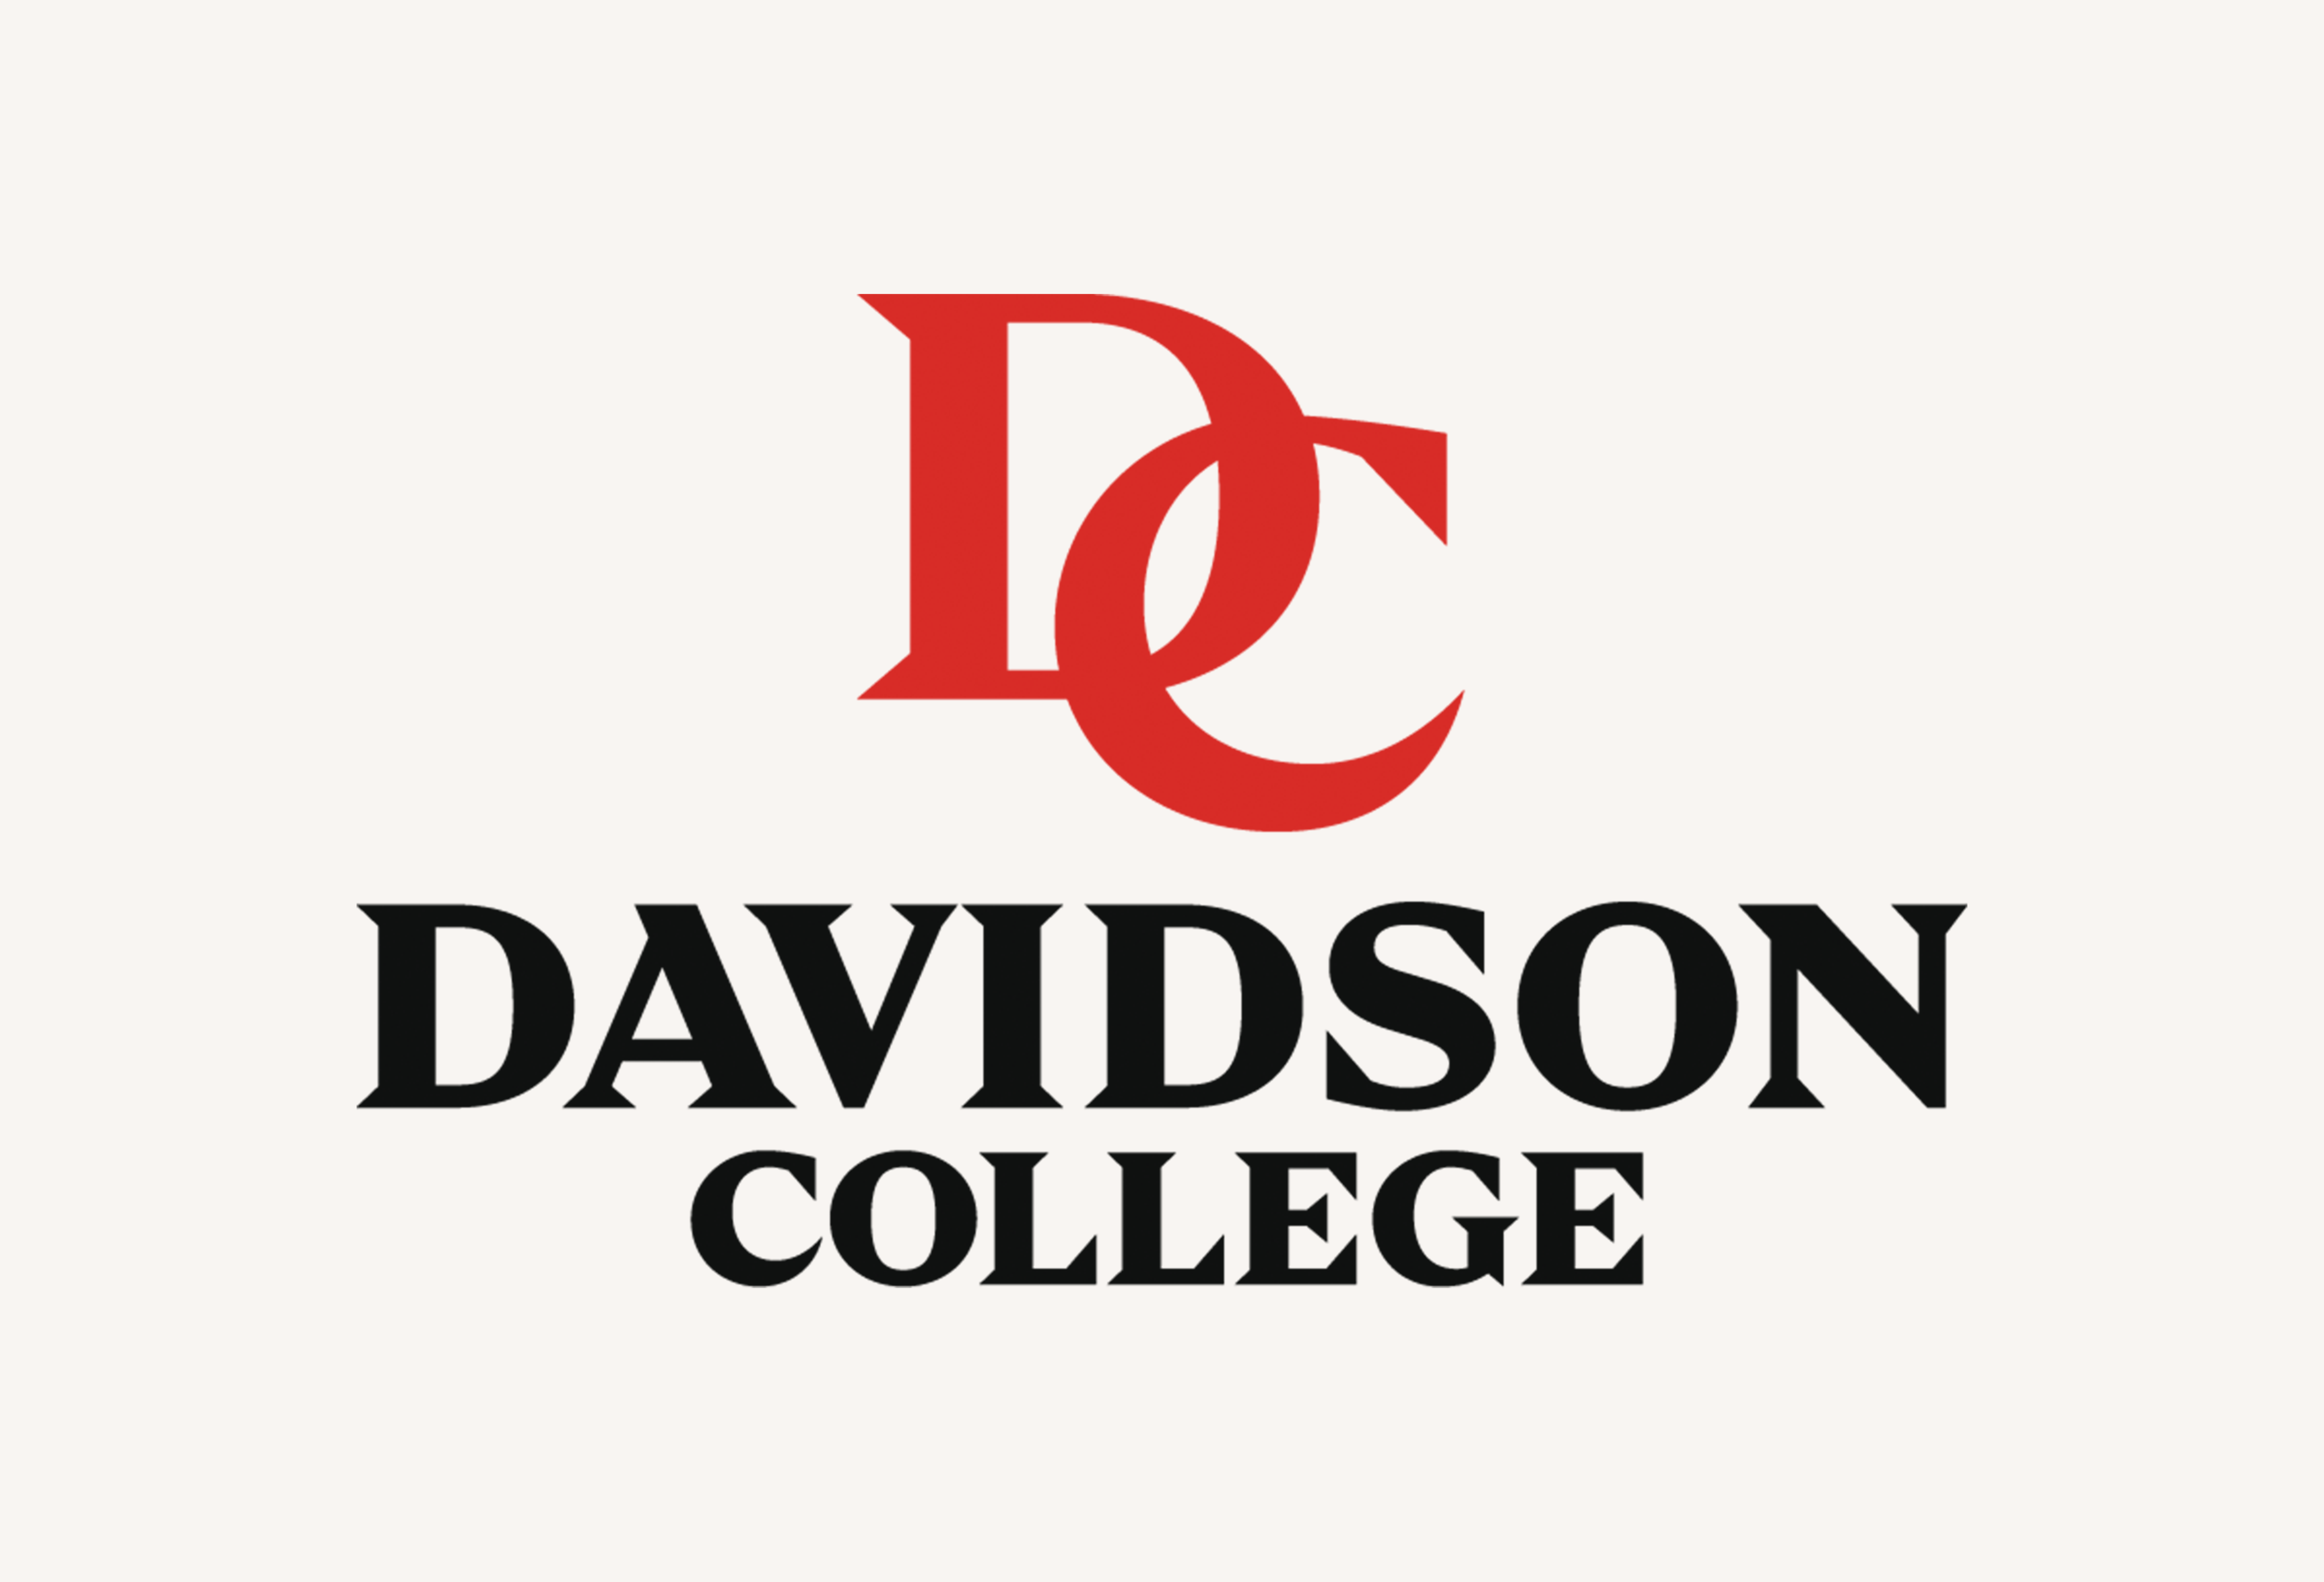 Davidson College primary logo lockup